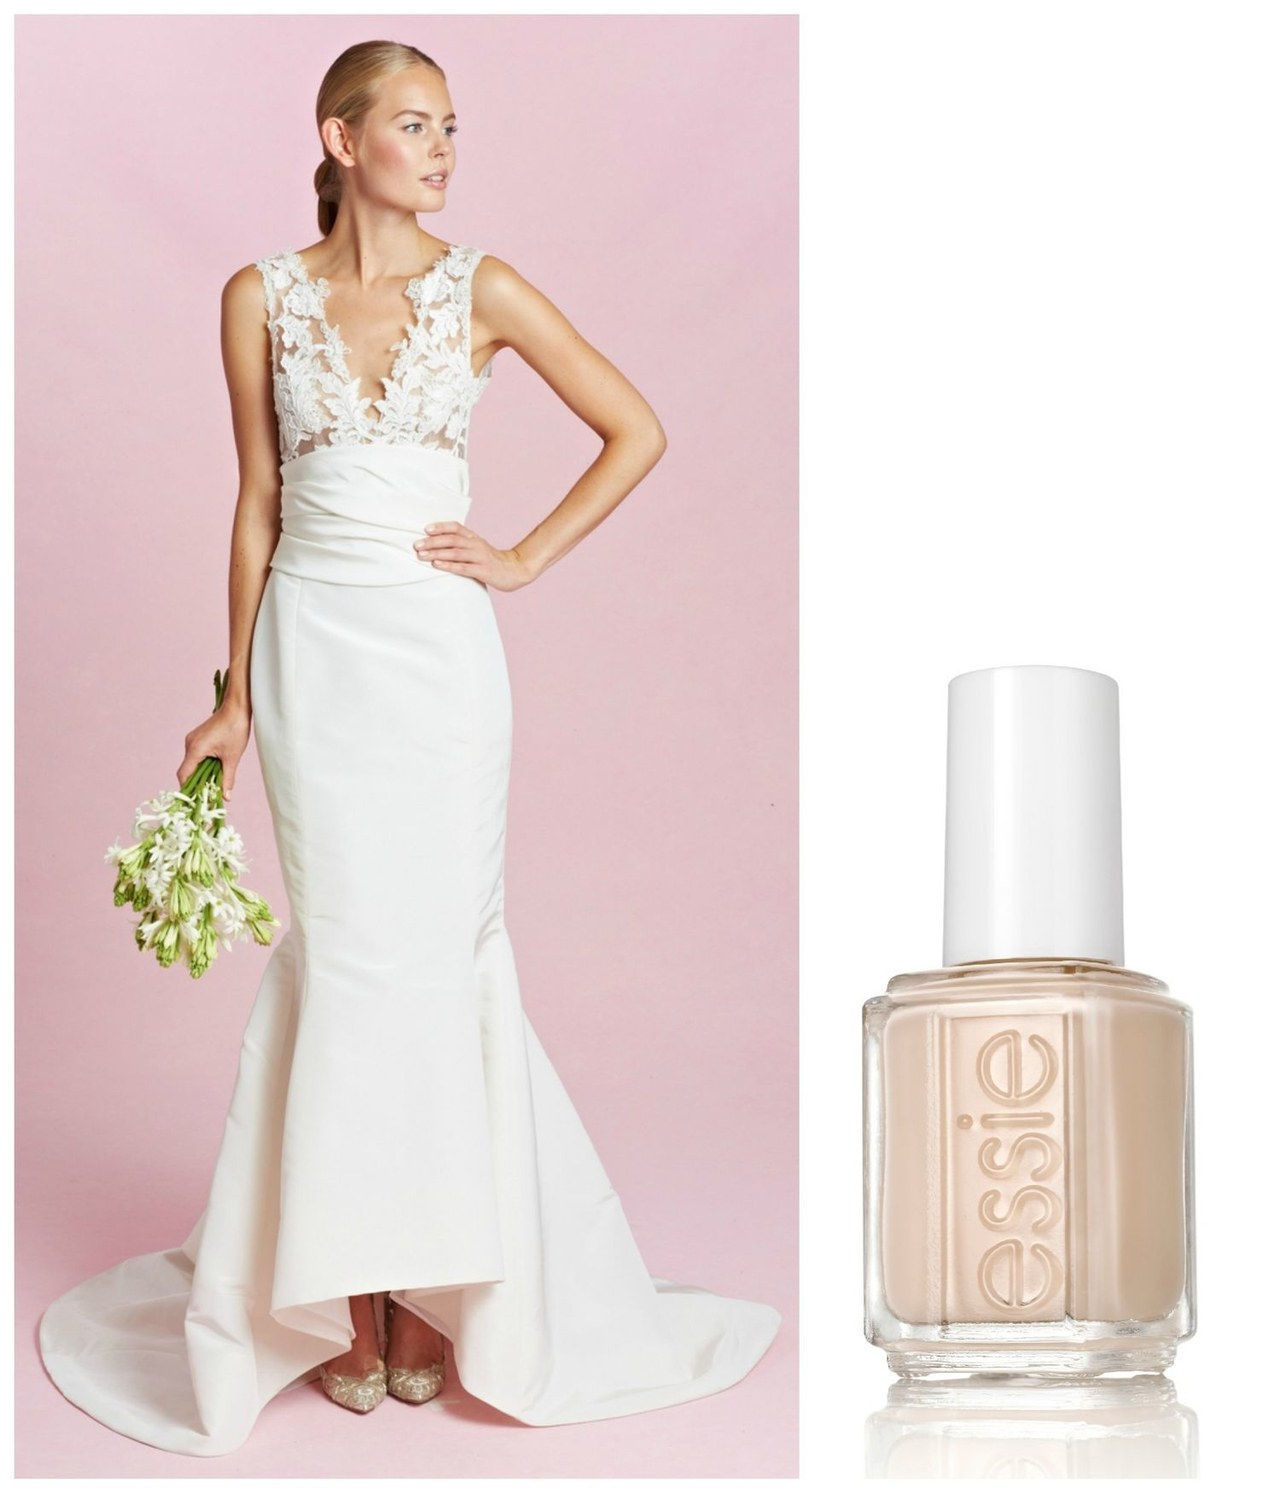 4 best wedding nail polish for brides 0408 courtesy